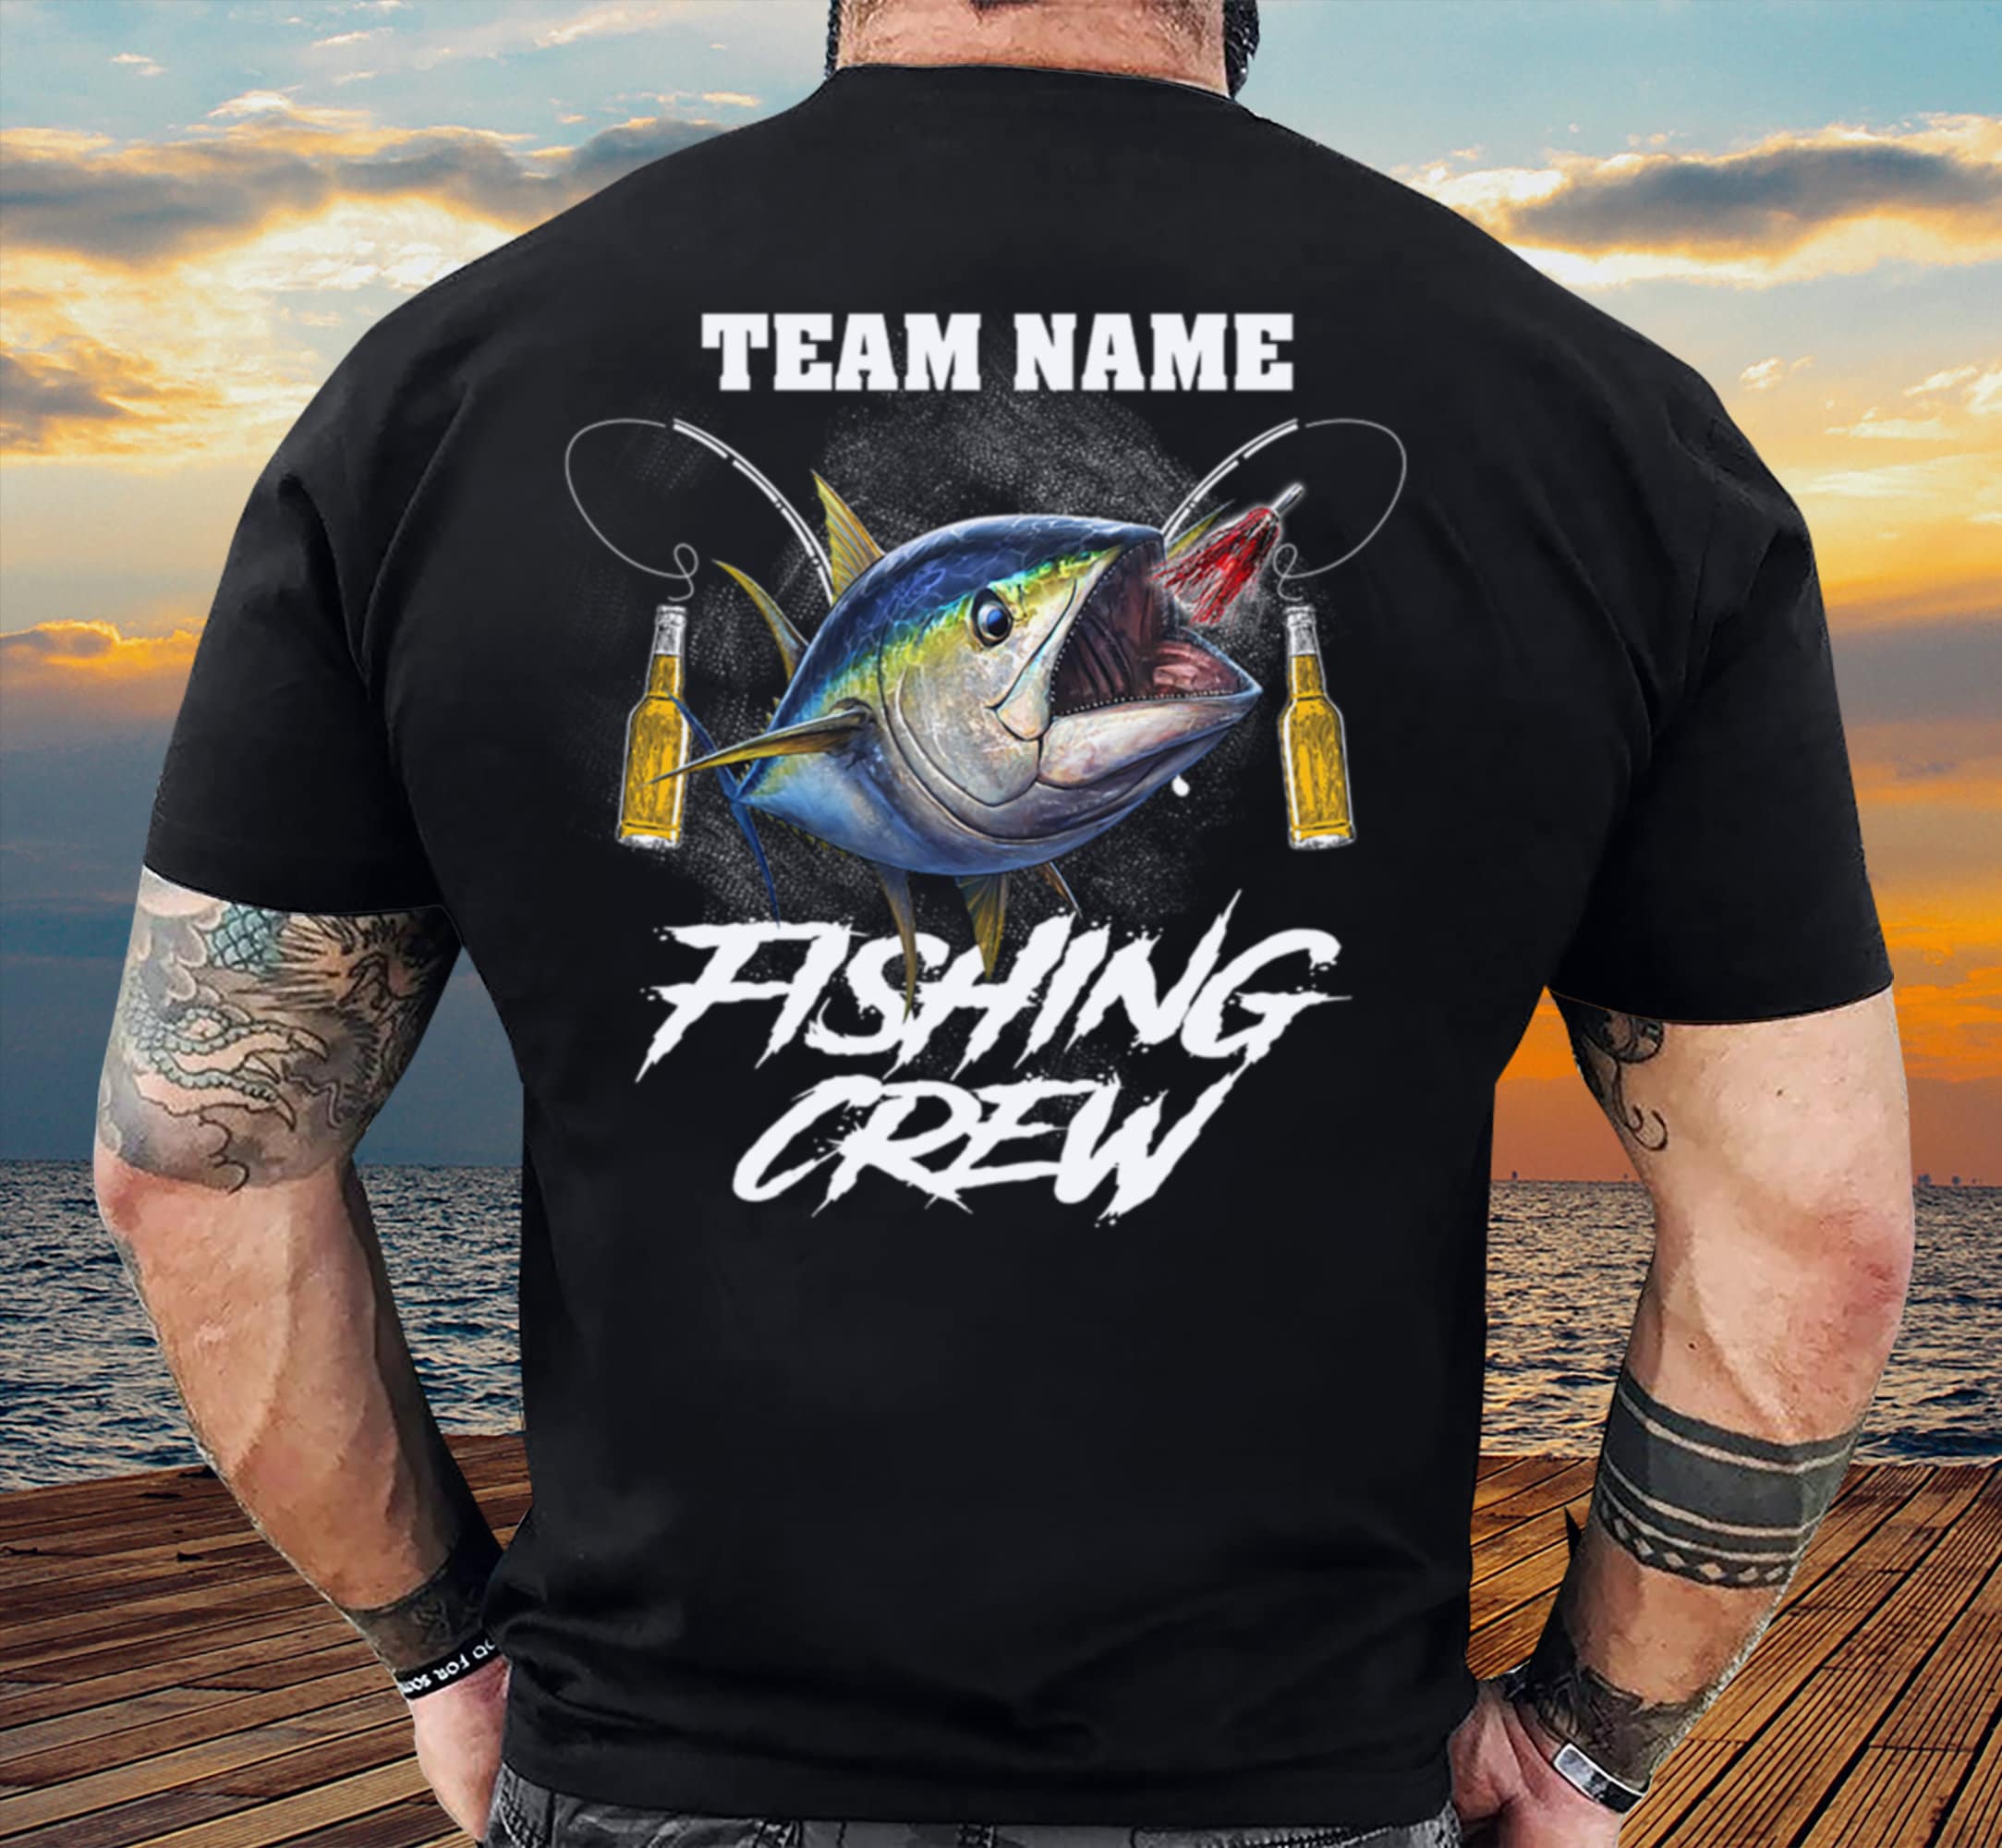 Personalized Name Fishing, Team Name Tuna Fishing Crew T-shirt Yellowfin  Tuna Boat Fishing -  Ireland